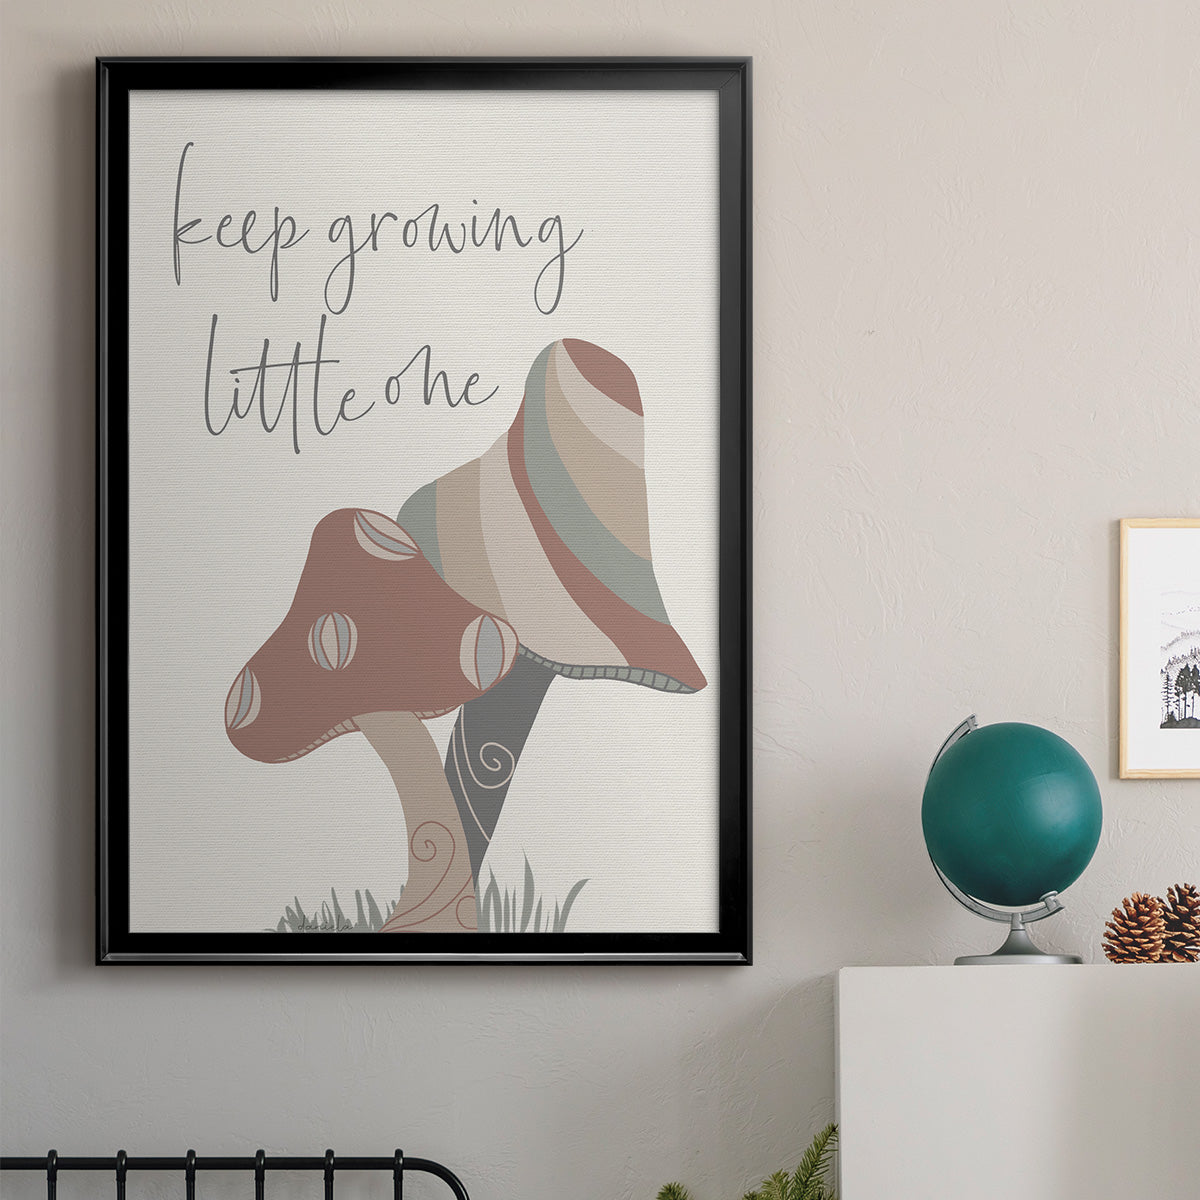 Keep Growing Premium Framed Print - Ready to Hang